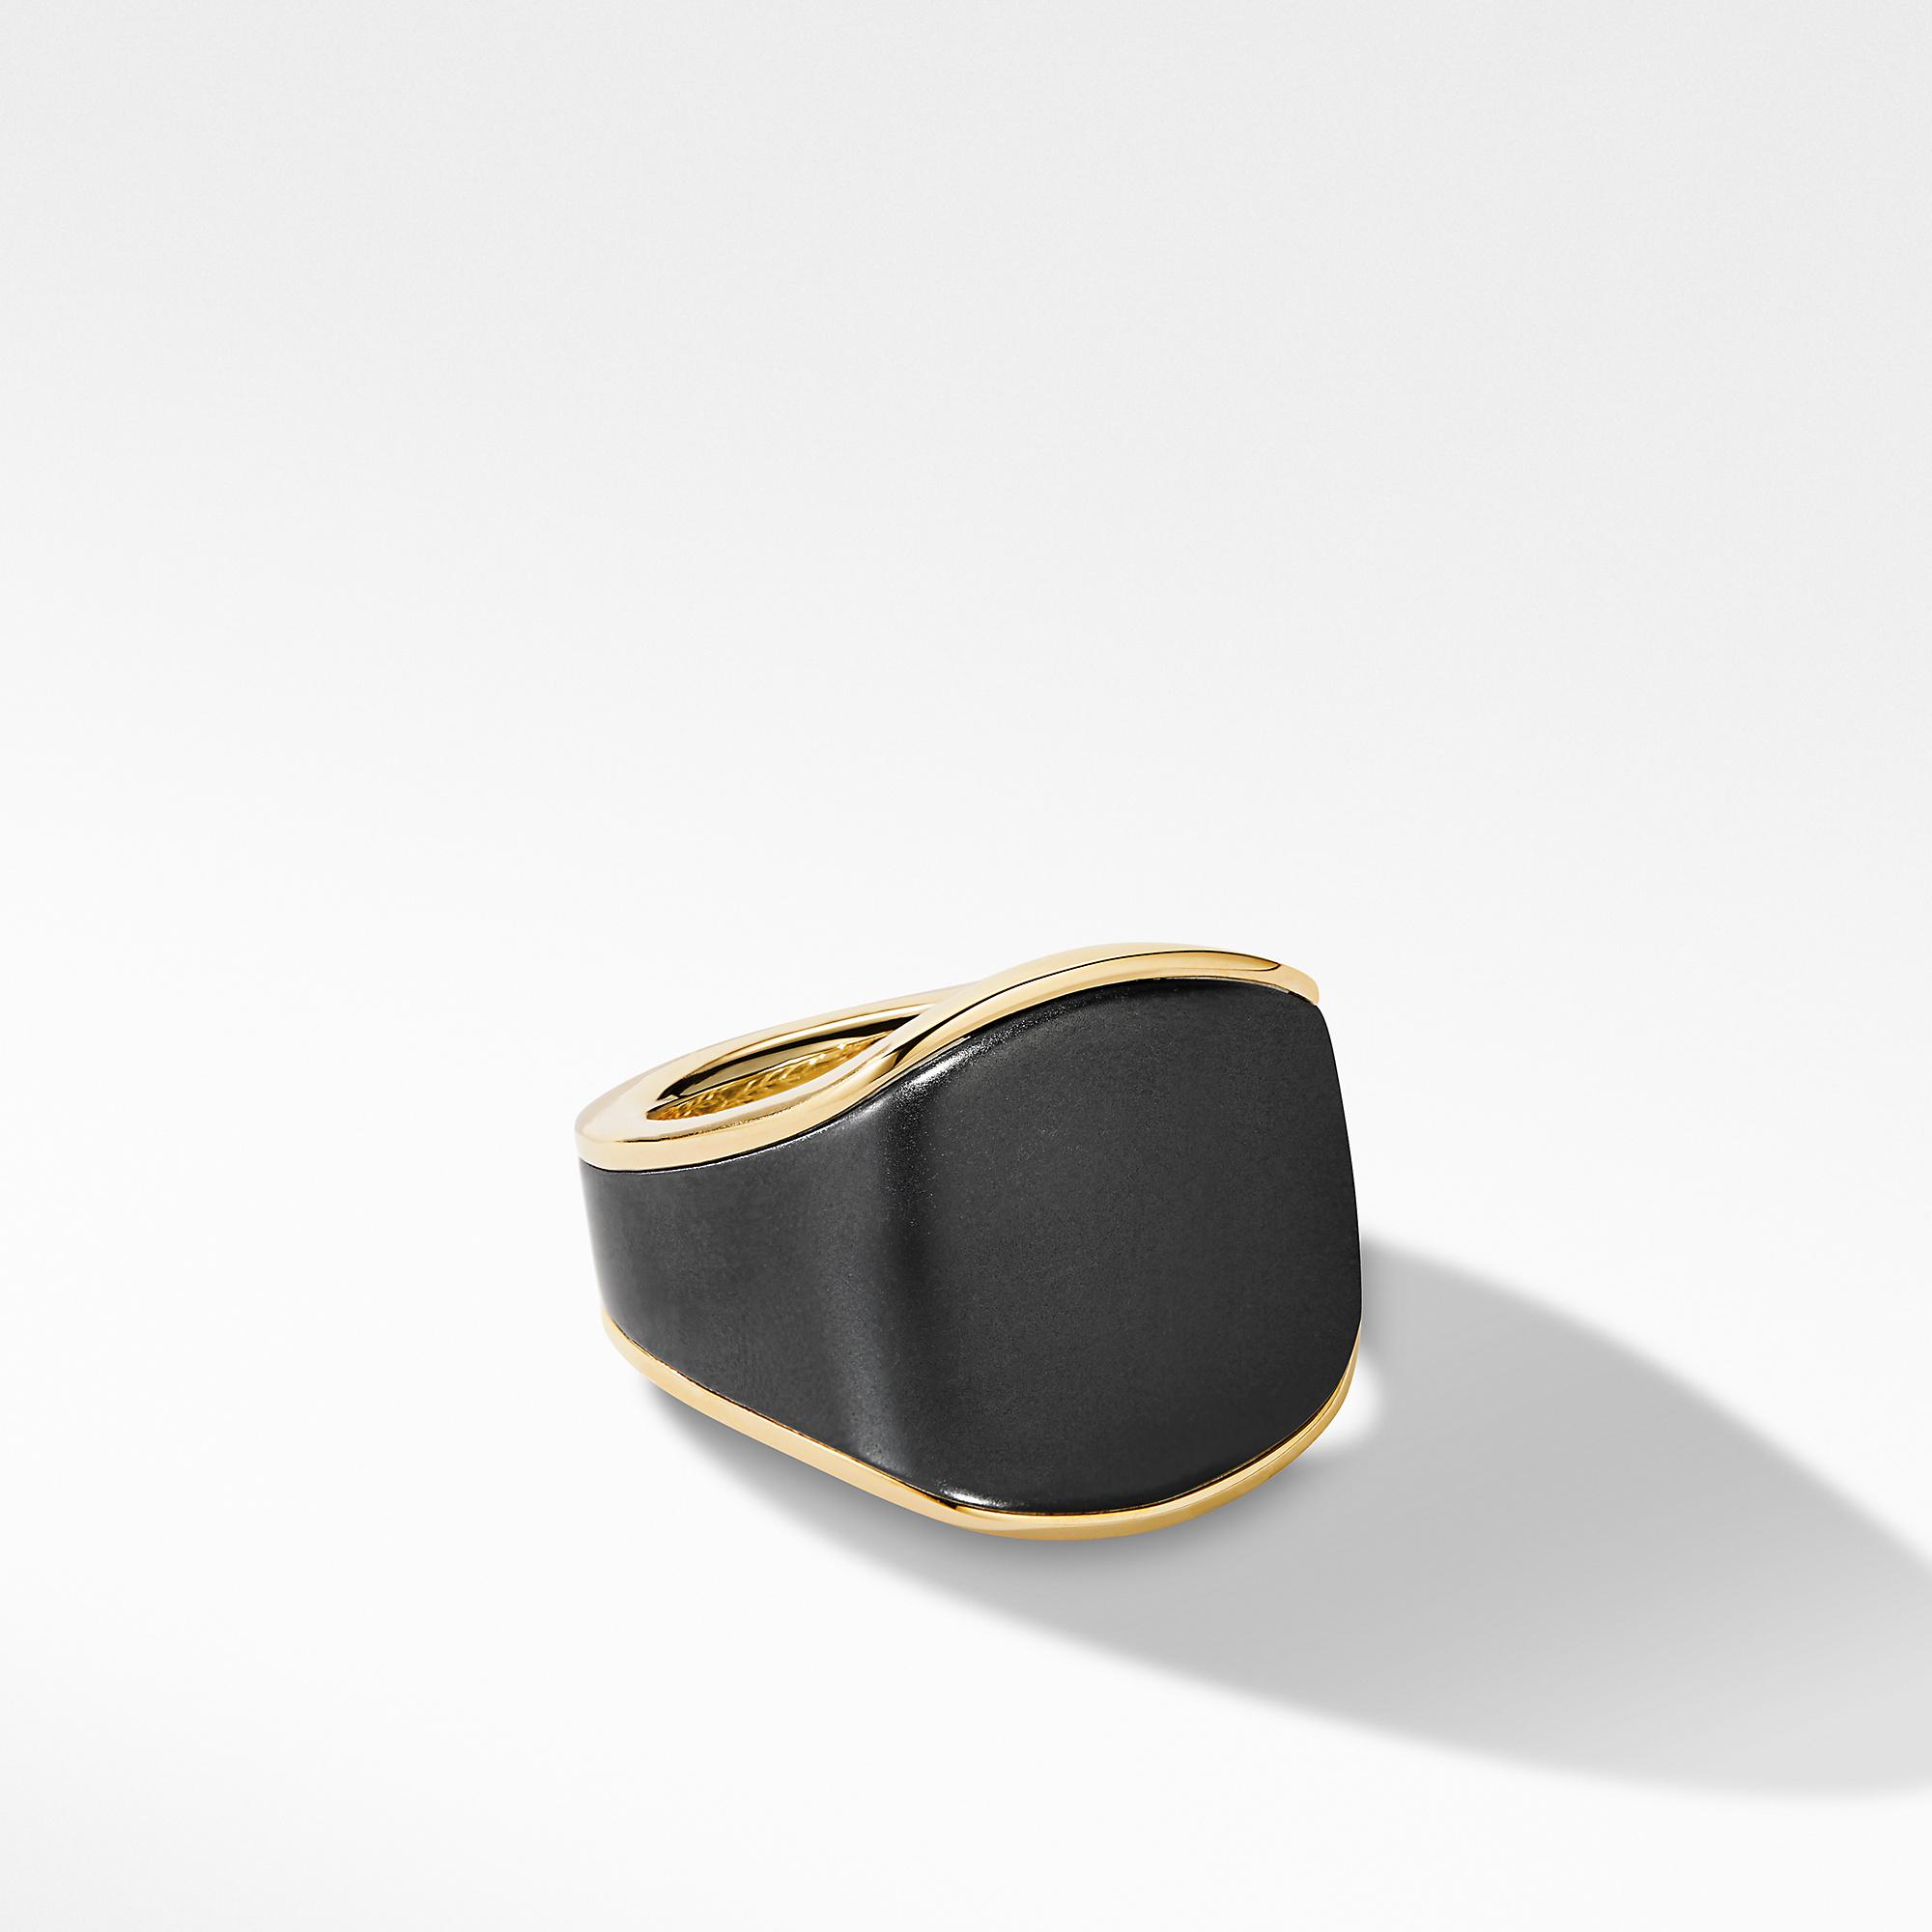 David Yurman Men's Streamline Signet Ring in 18k Yellow Gold with Black Titanium